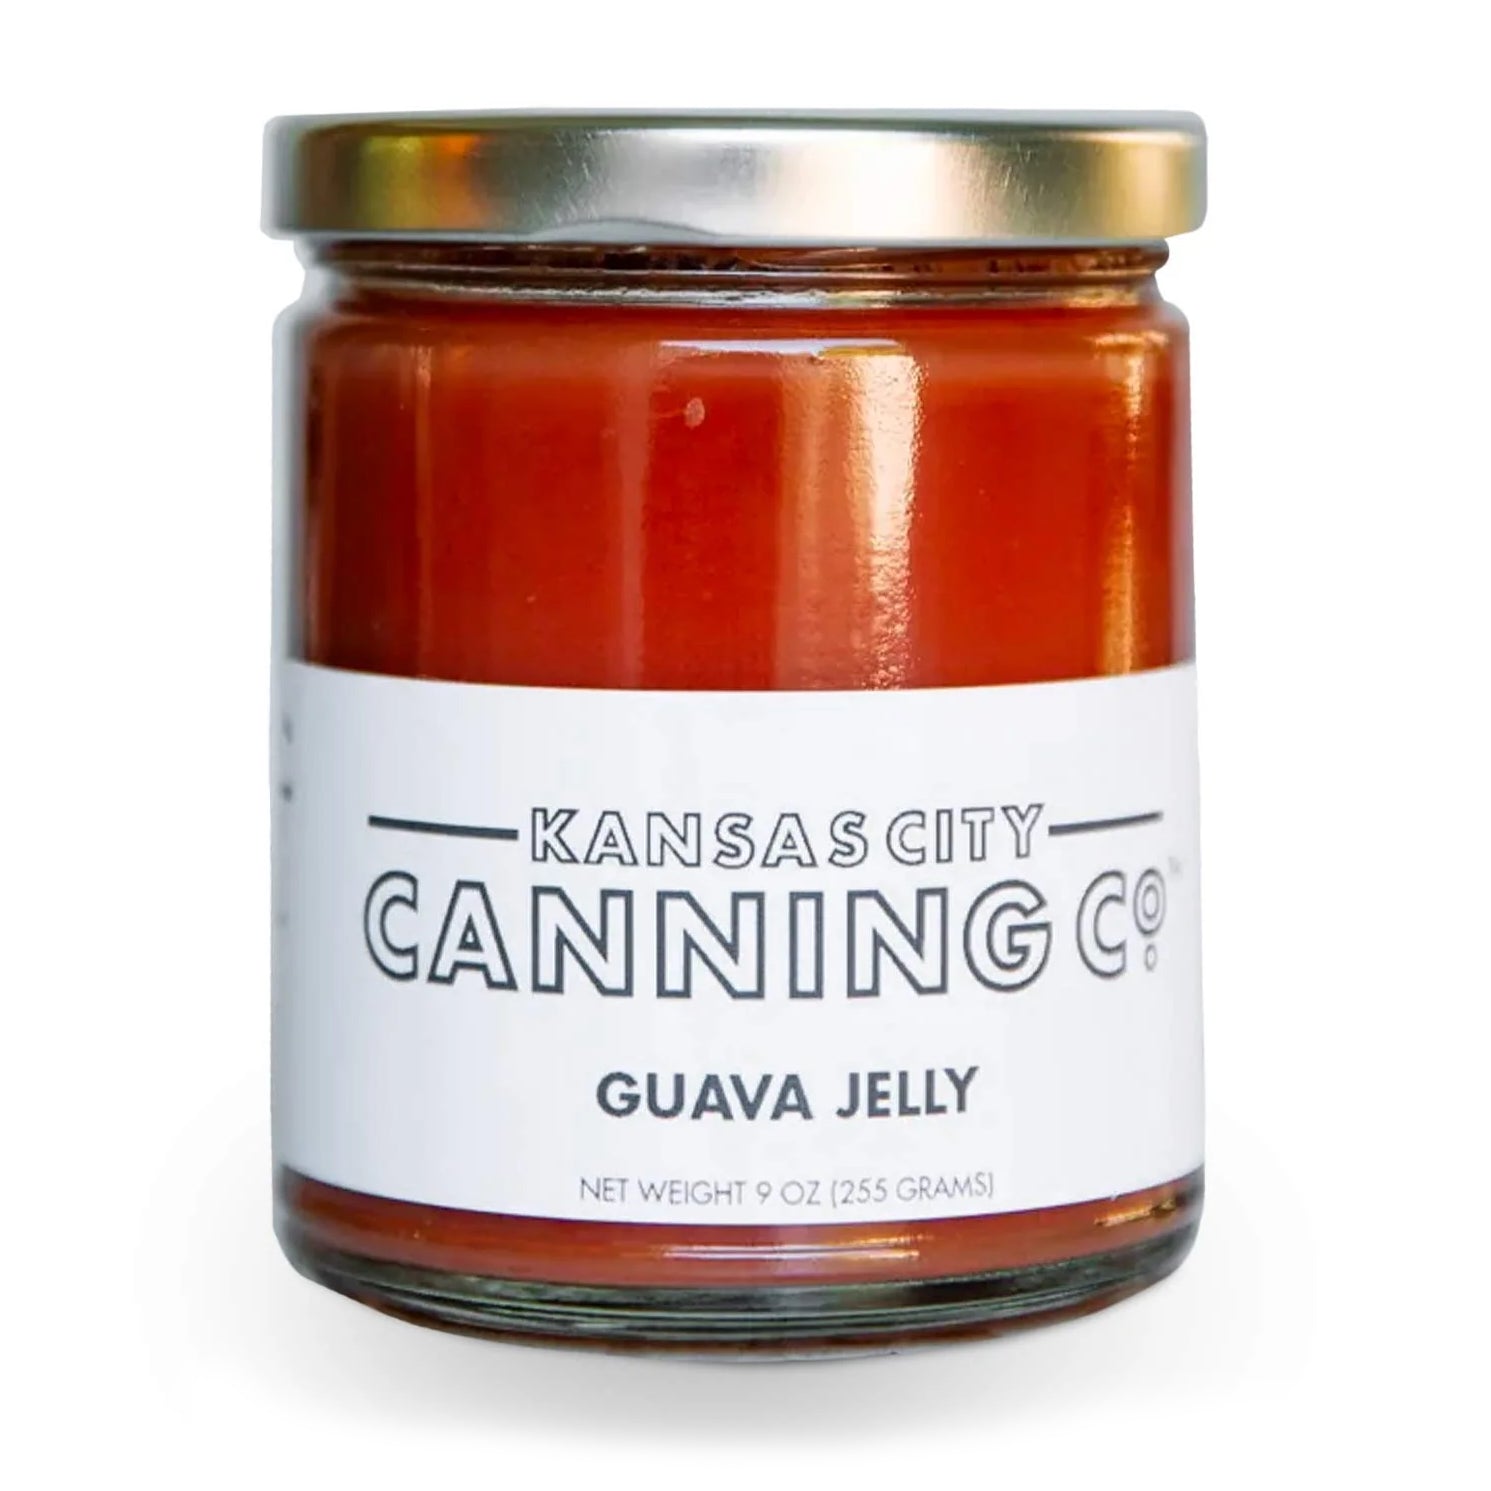 Kansas City Canning Co Guava Jelly Jams & Jellies 12043297